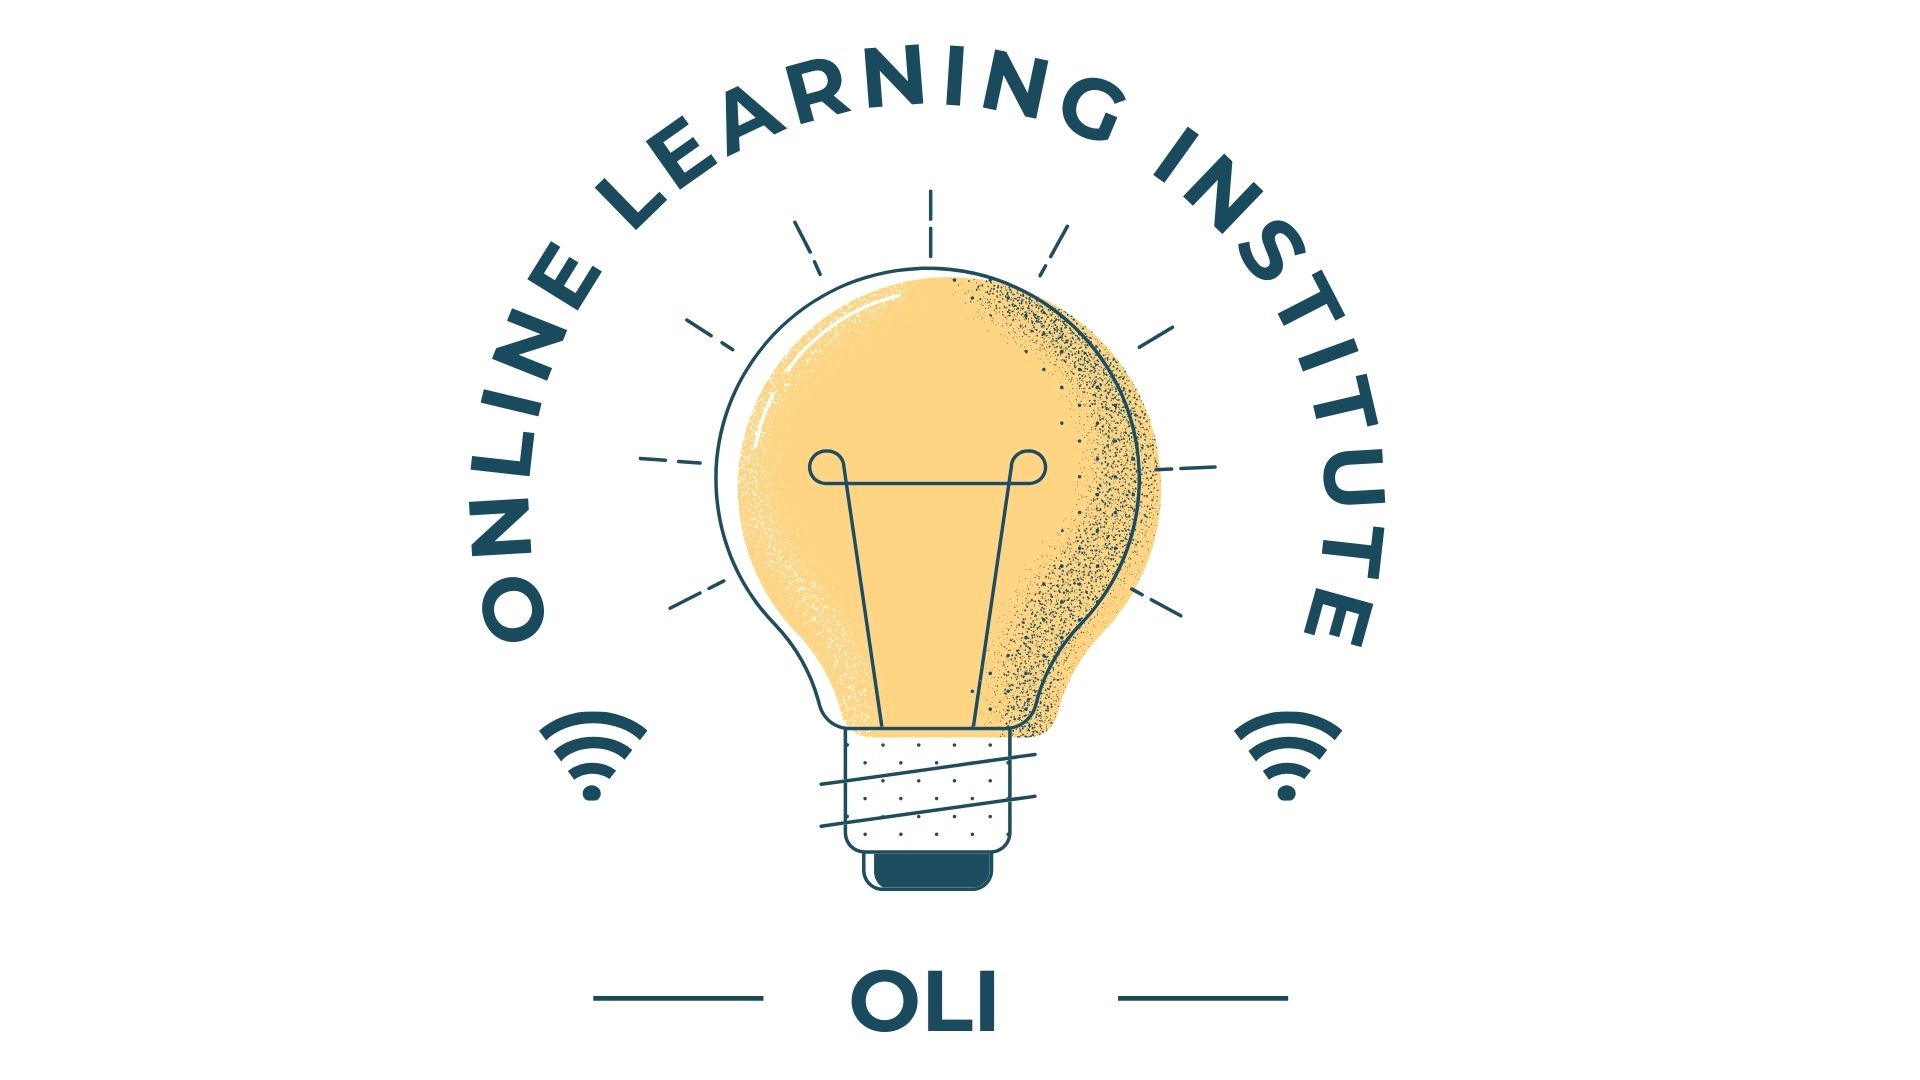 OLI! An Online Learning Institute